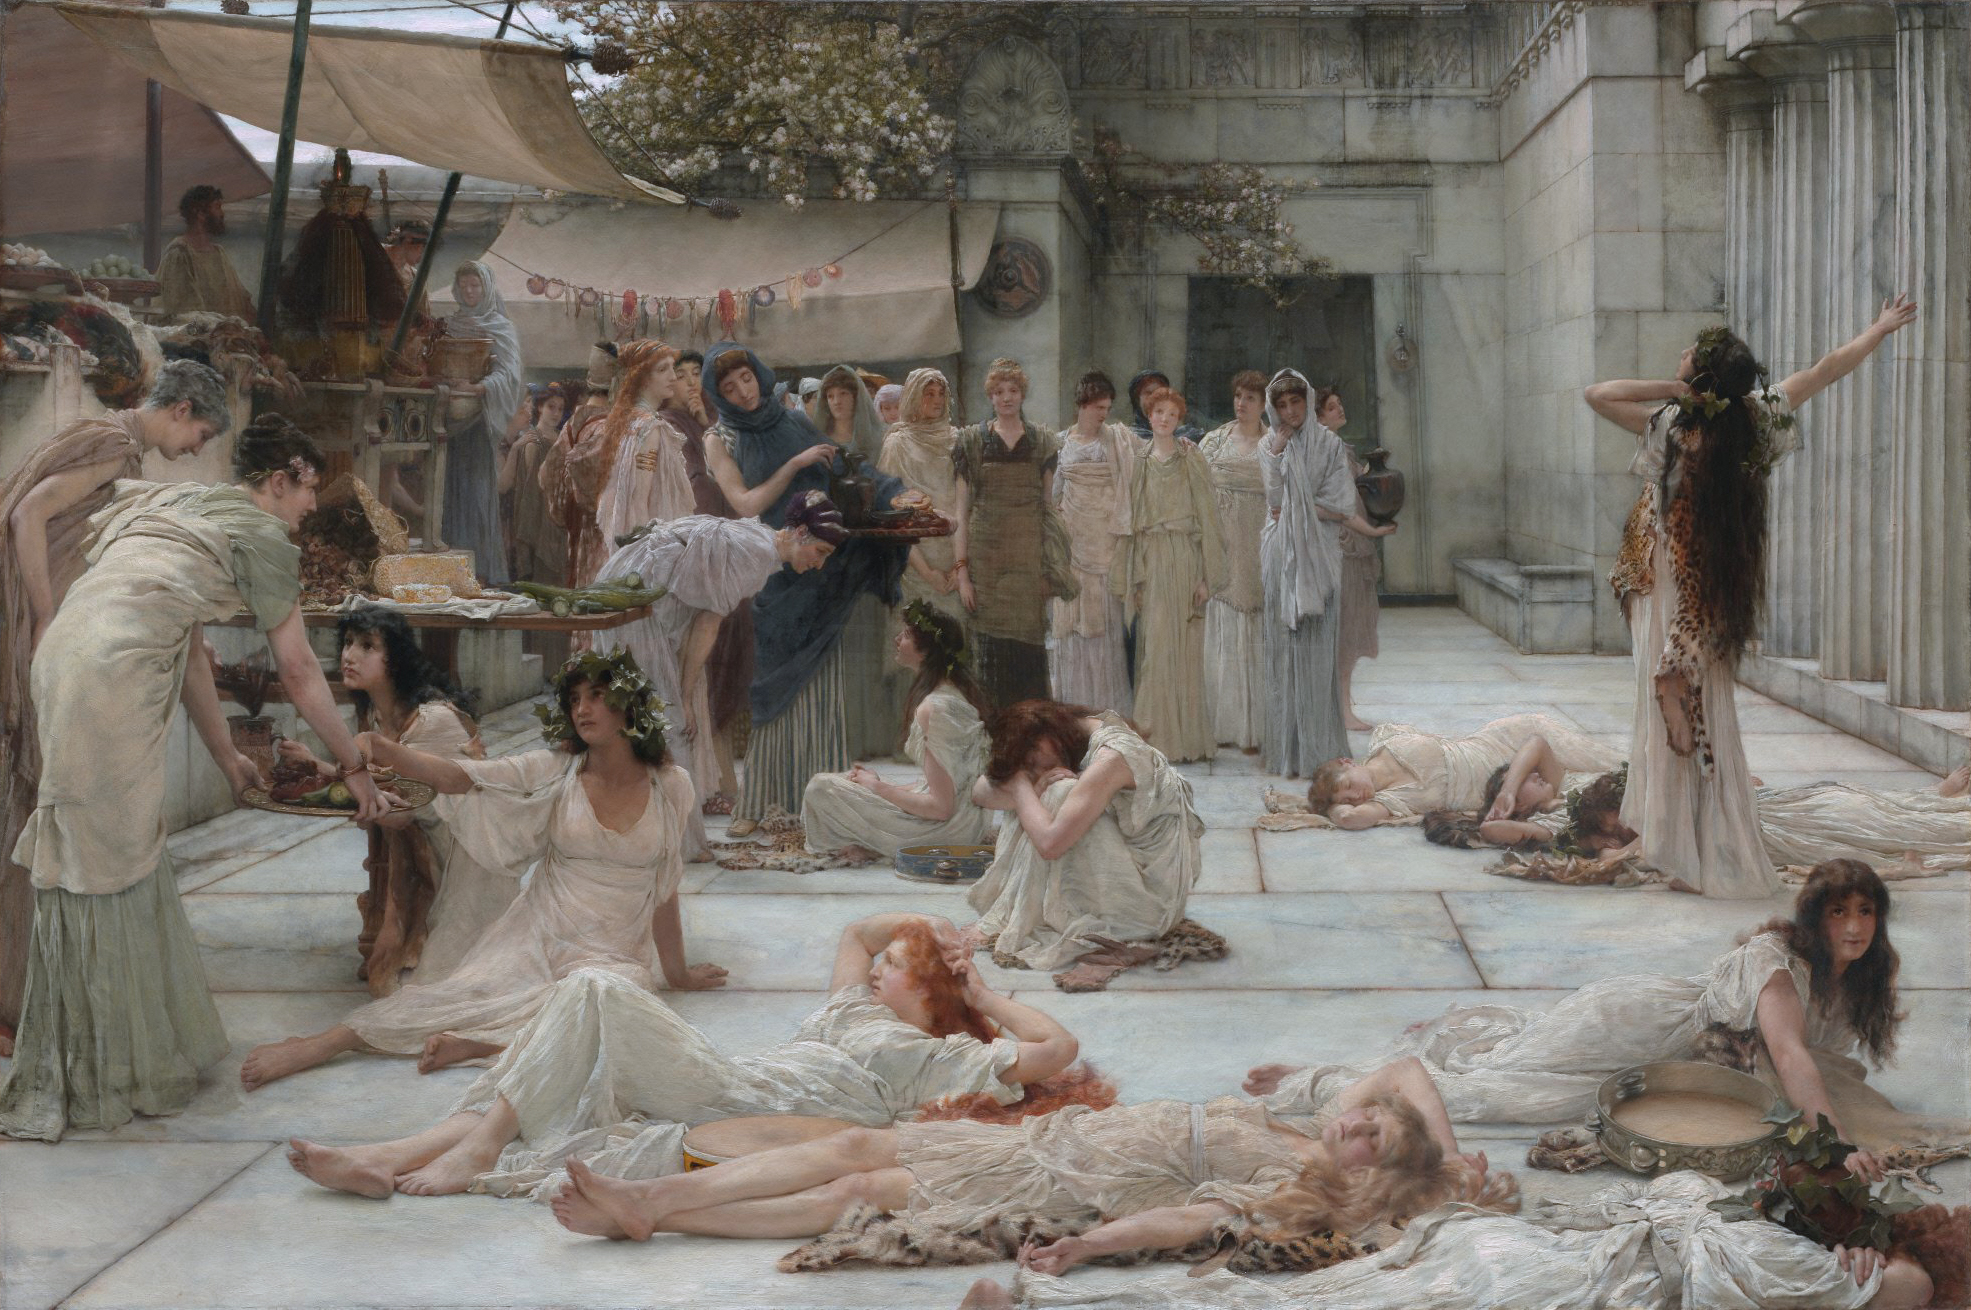 Les Femmes d’Amphissa by Lawrence Alma-Tadema - 1877 collection privée